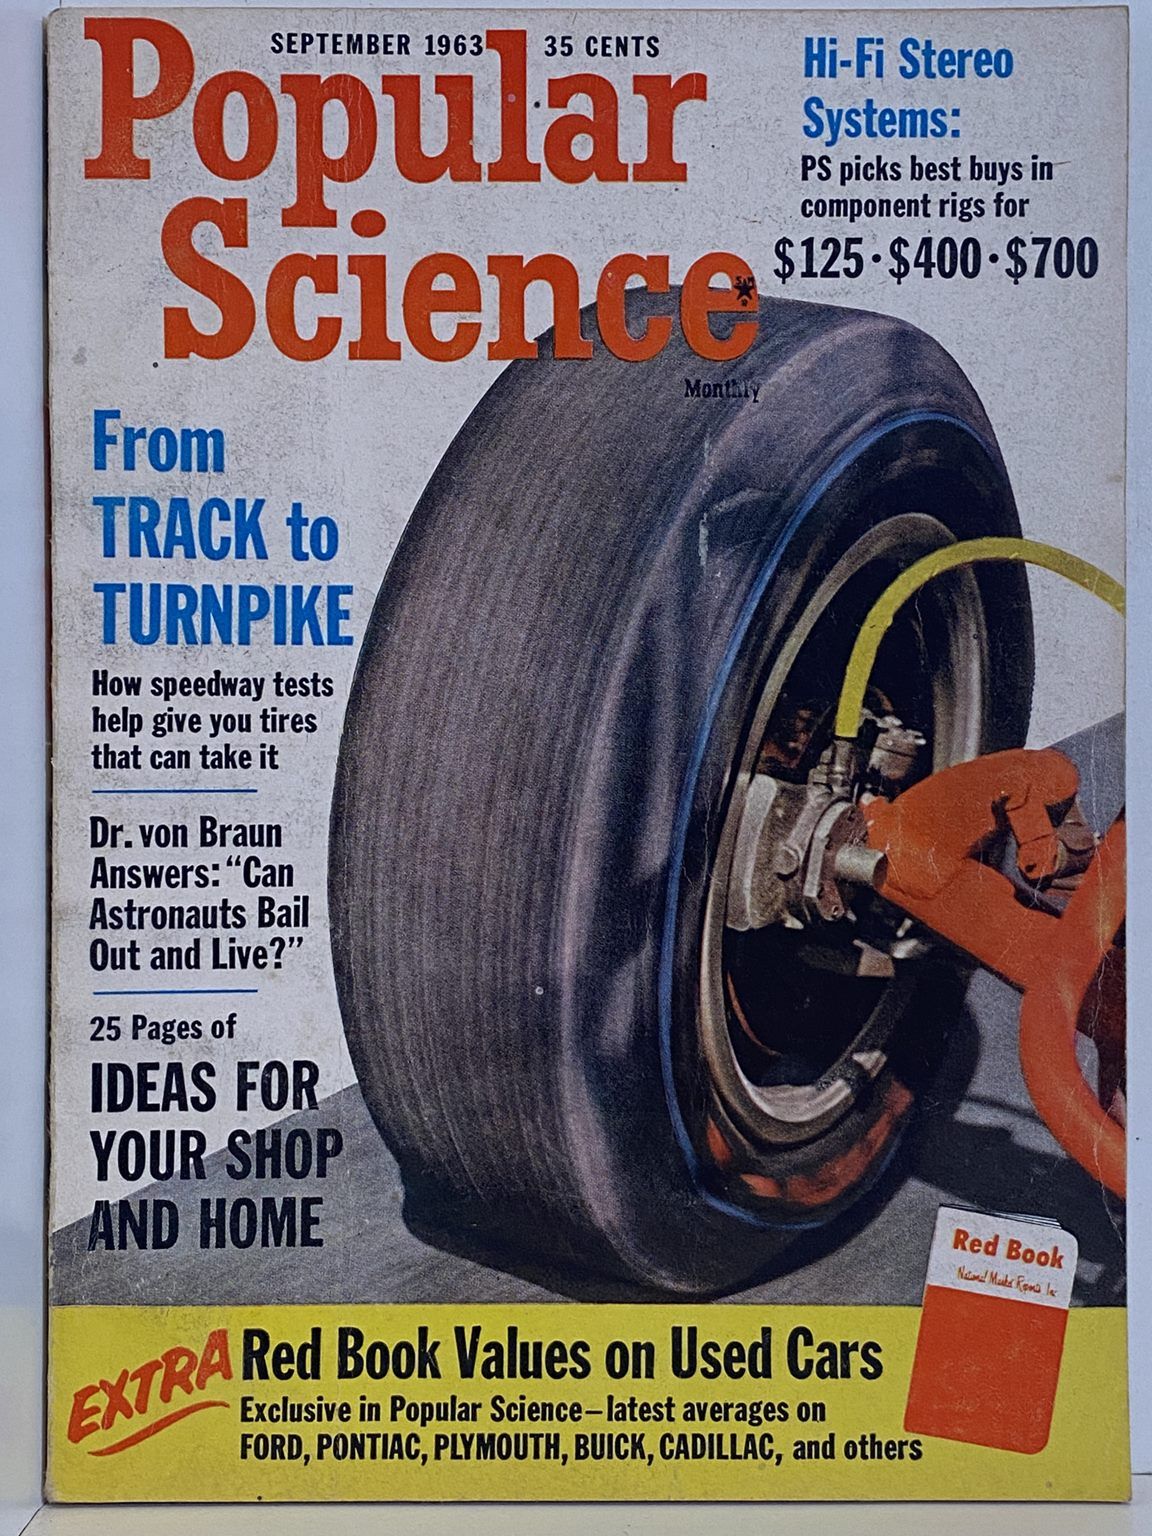 VINTAGE MAGAZINE: Popular Science, Vol. 183, No. 3 - September 1963